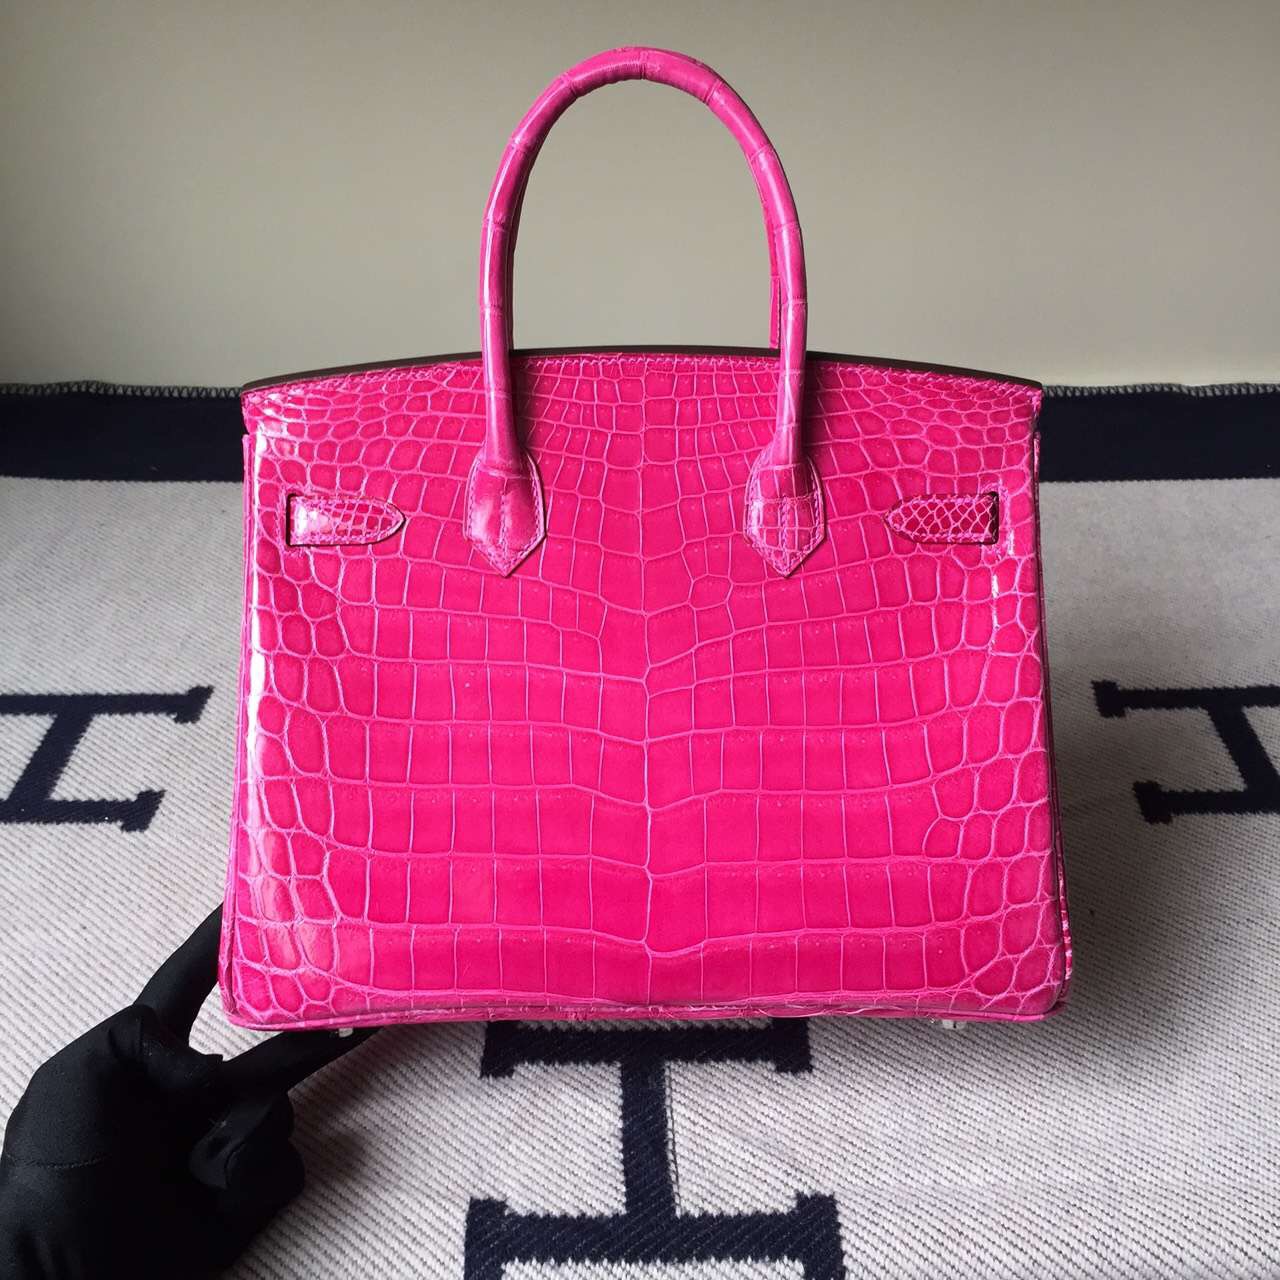 Cheap Hermes Crocodile Shiny Leather Birkin30cm Bag in Peach Pink